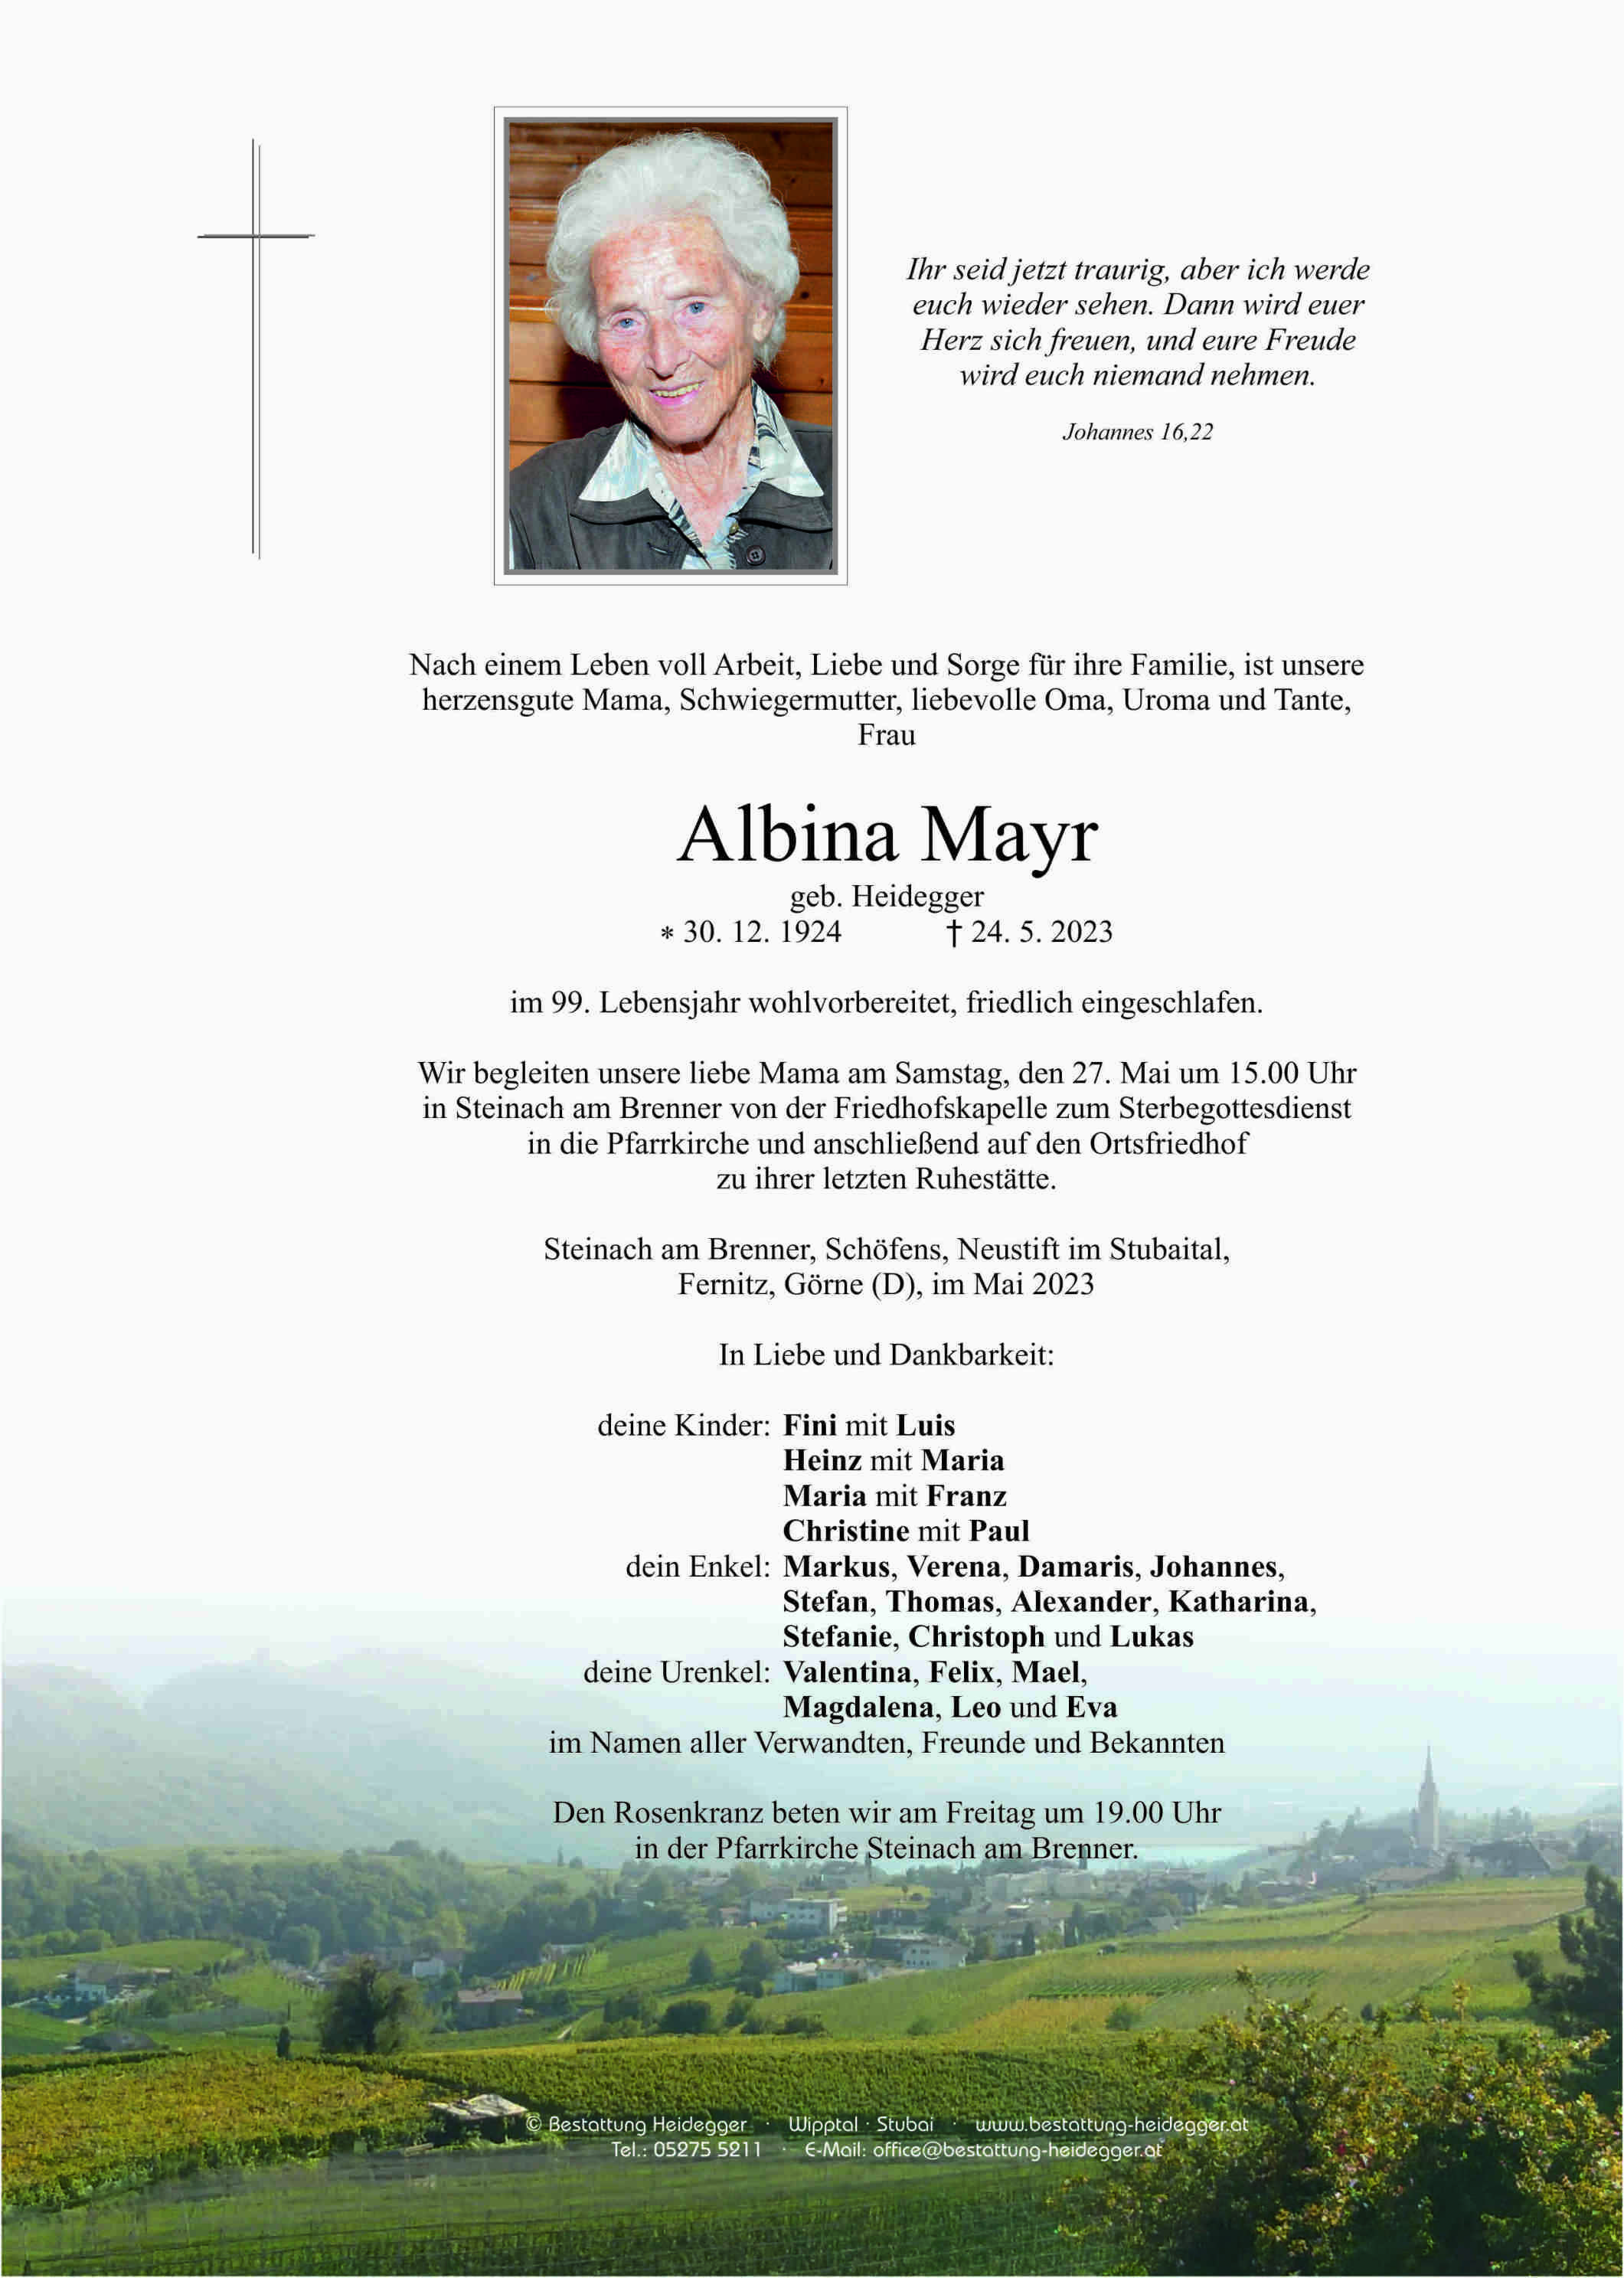 Albina Mayr